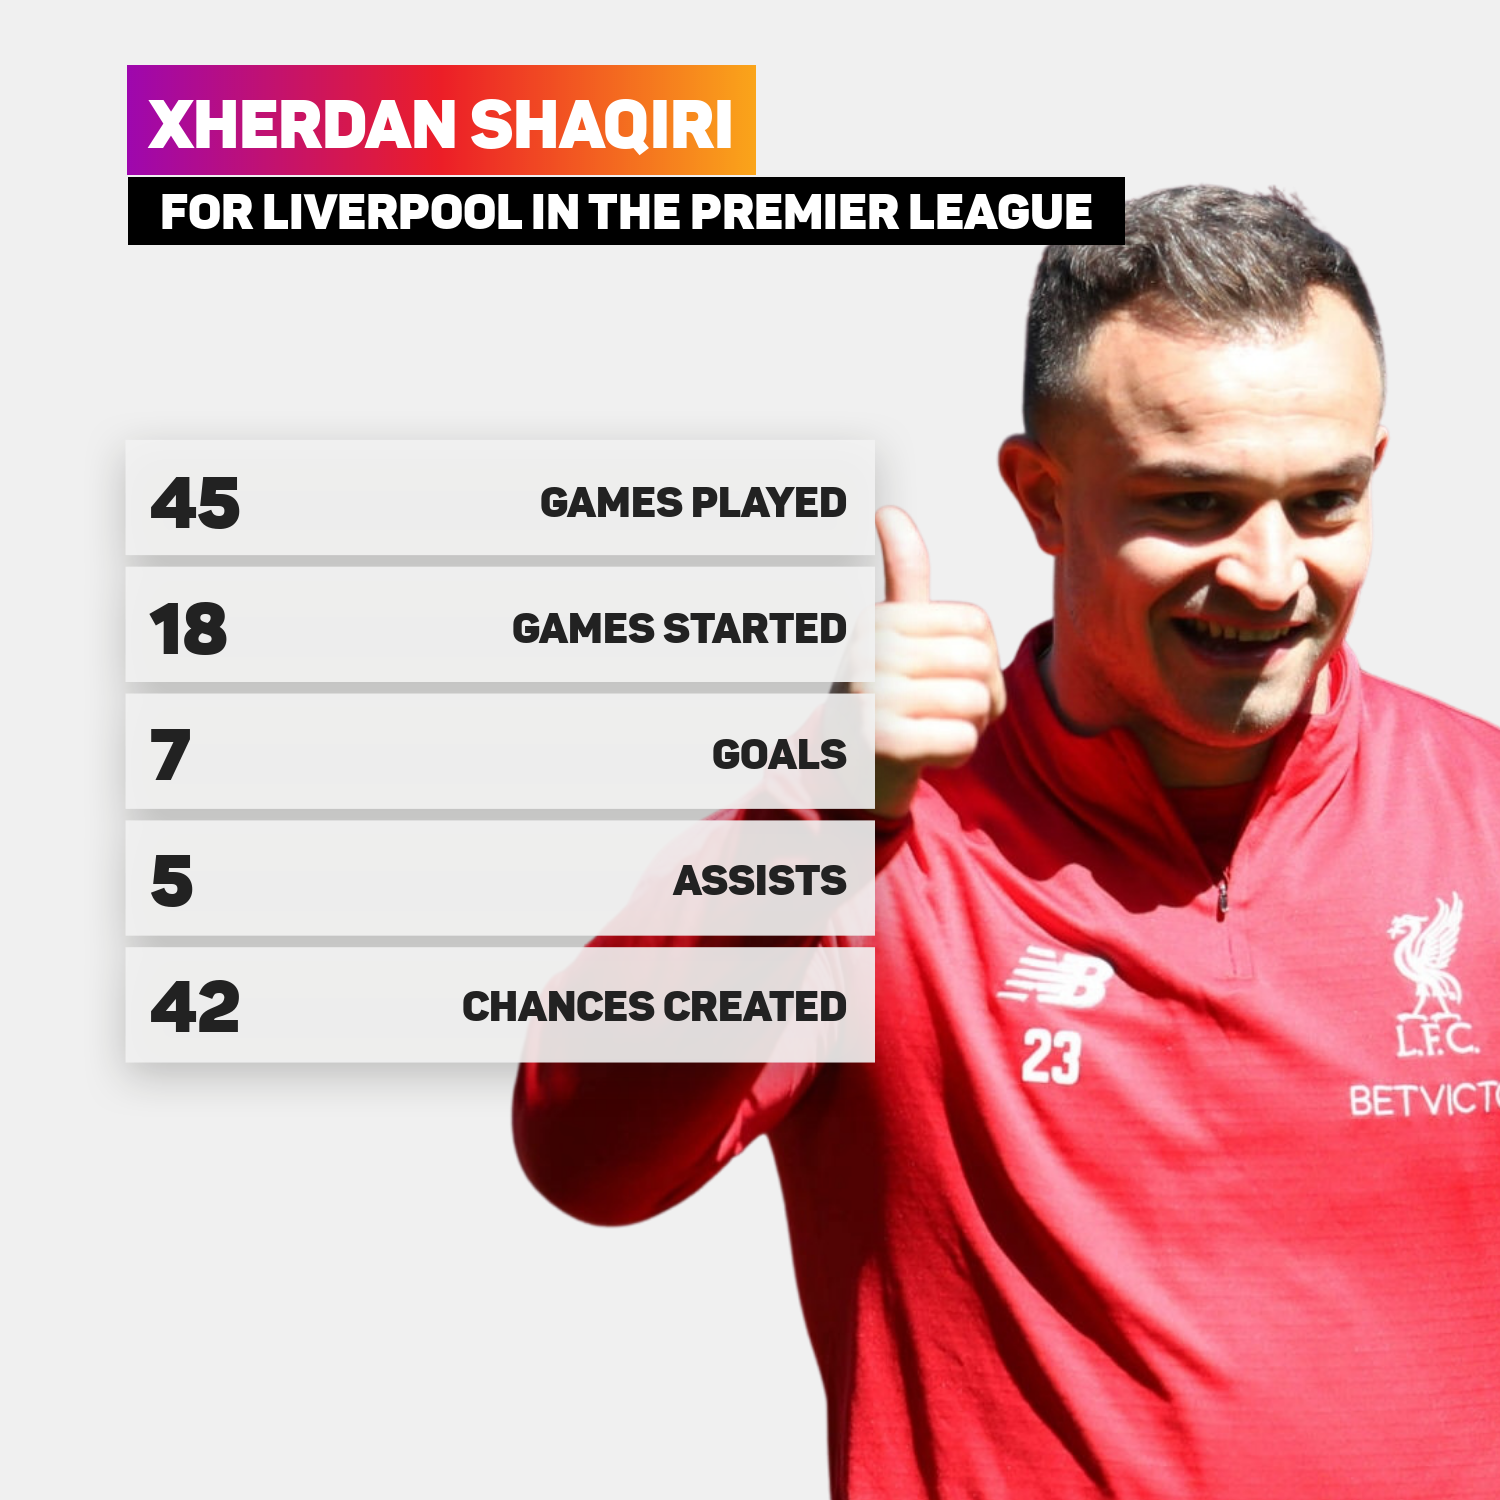 Xherdan Shaqiri played 45 times for Liverpool in the Premier League